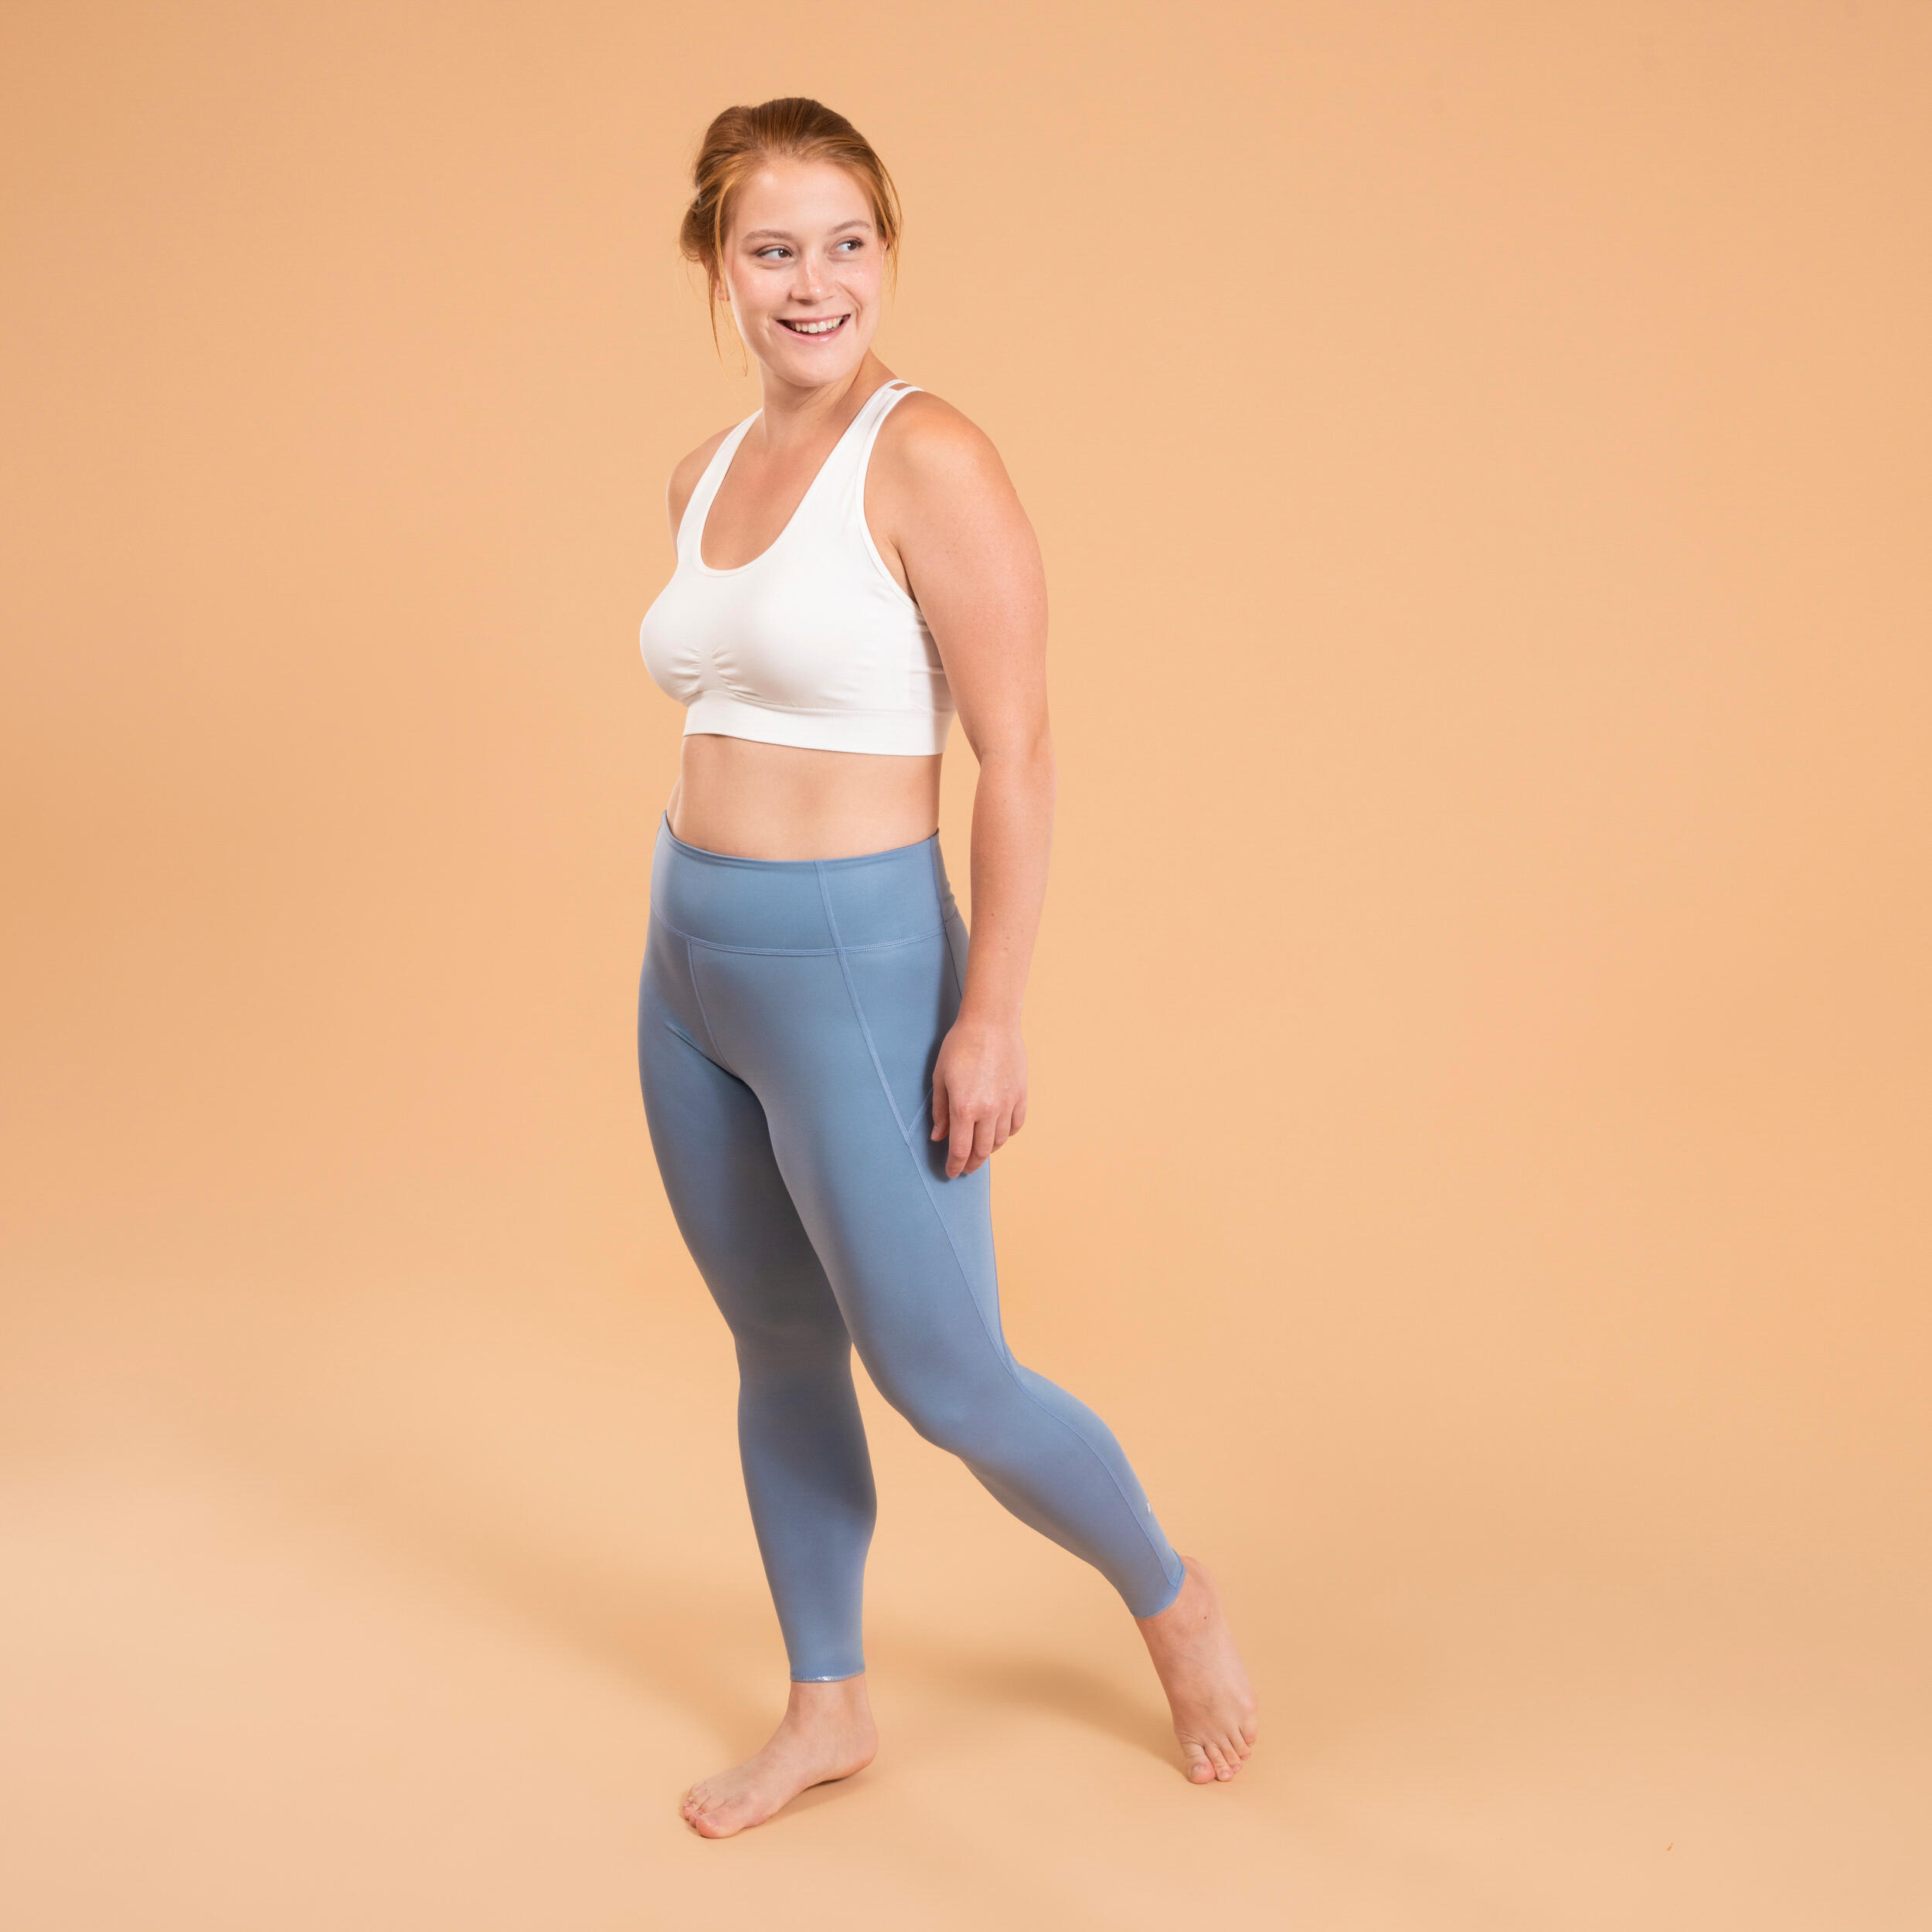 Yoga Sxy Tiger Skin Print Wideband Waist Sports Leggings